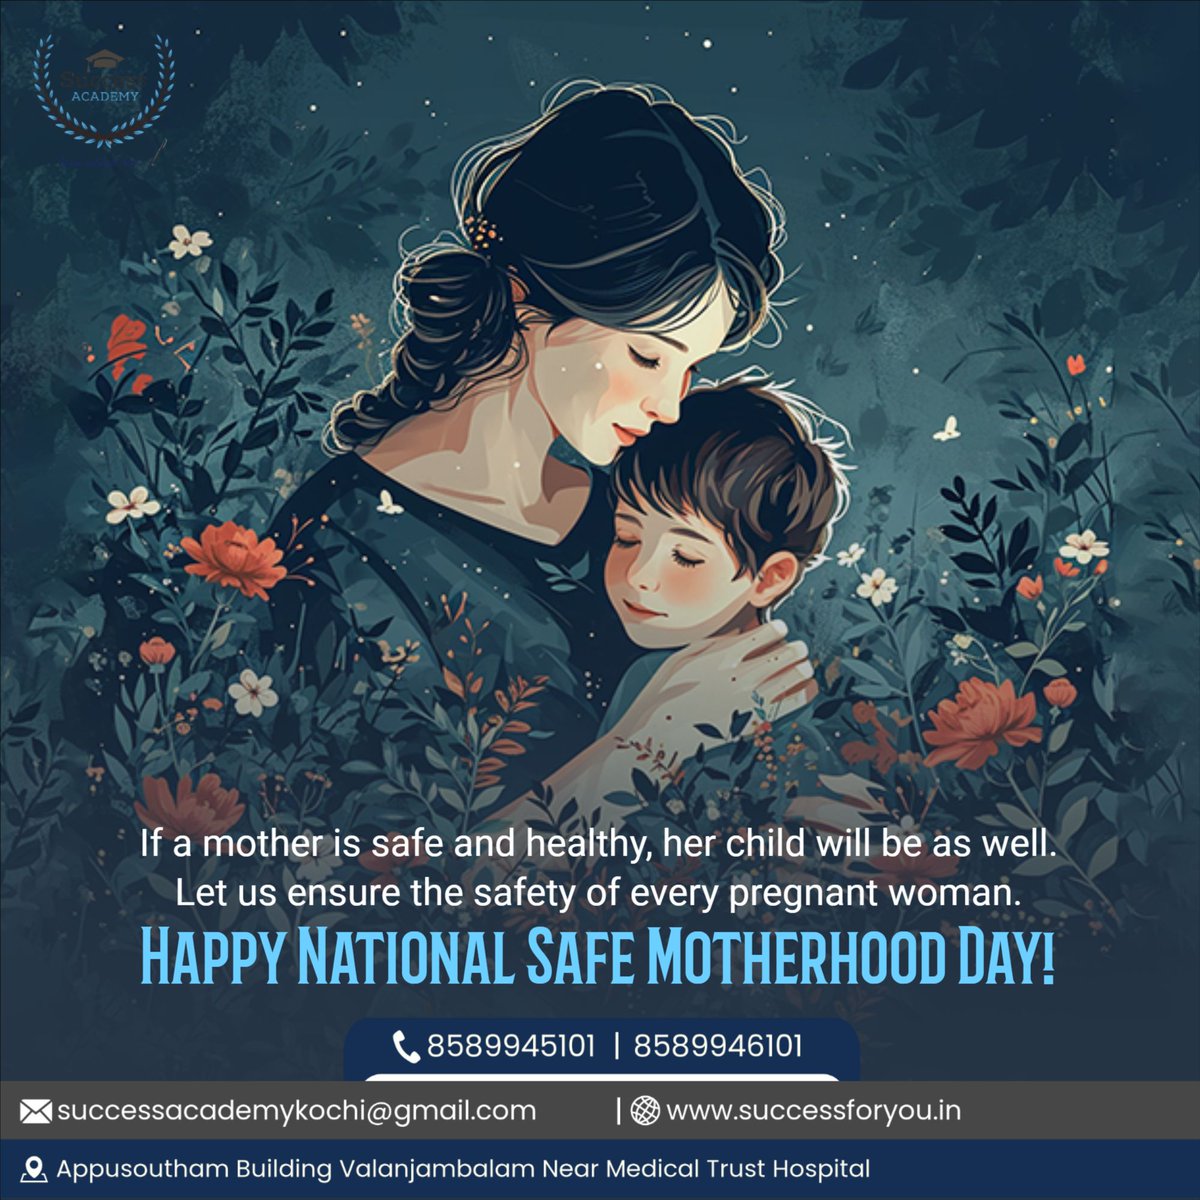 #SafeMotherhood #MaternalHealth #HealthyMomHappyBaby #SafeDelivery
#MaternalCare #SafePregnancy #MotherAndChildHealth #MaternalWellness
#SafeMotherhoodDay #HealthyPregnancy #MomAndBaby #SafeMotherhoodInitiative #SSCCoaching #BankCoaching #SuccessAcademyKochi